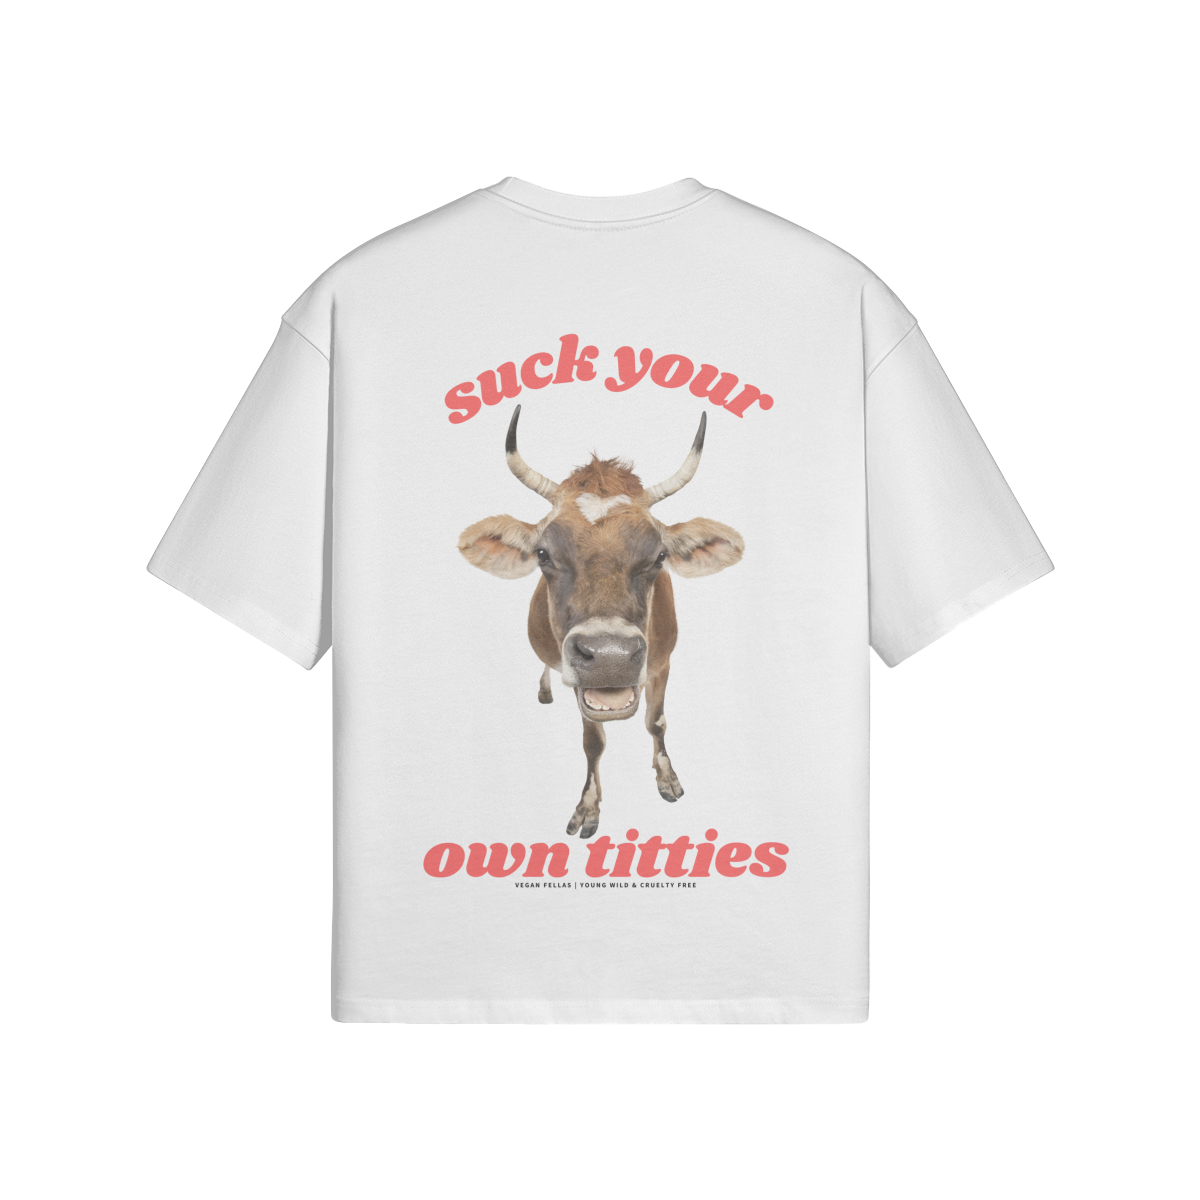 Vegan Fellas Oversized Vegan T-shirt with 'Sck Your Own Tt*es' Cow Design - Unique Vegan Outfitters Fashion